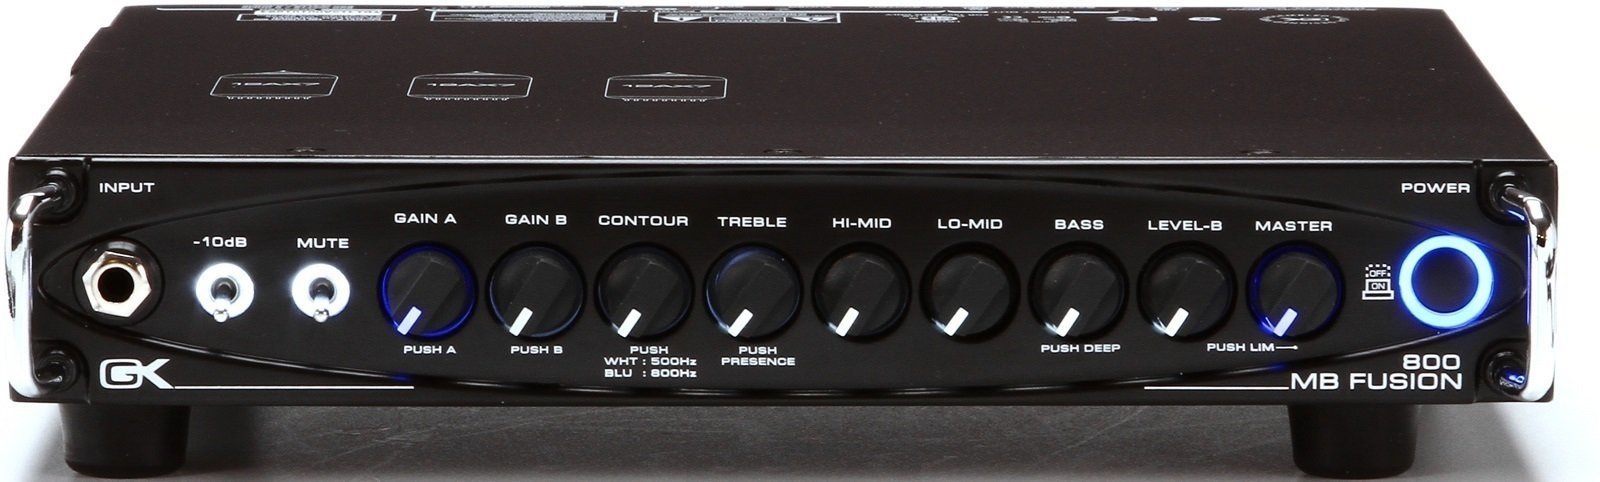 Amplificateur basse hybride Gallien Krueger MB-FUSION800